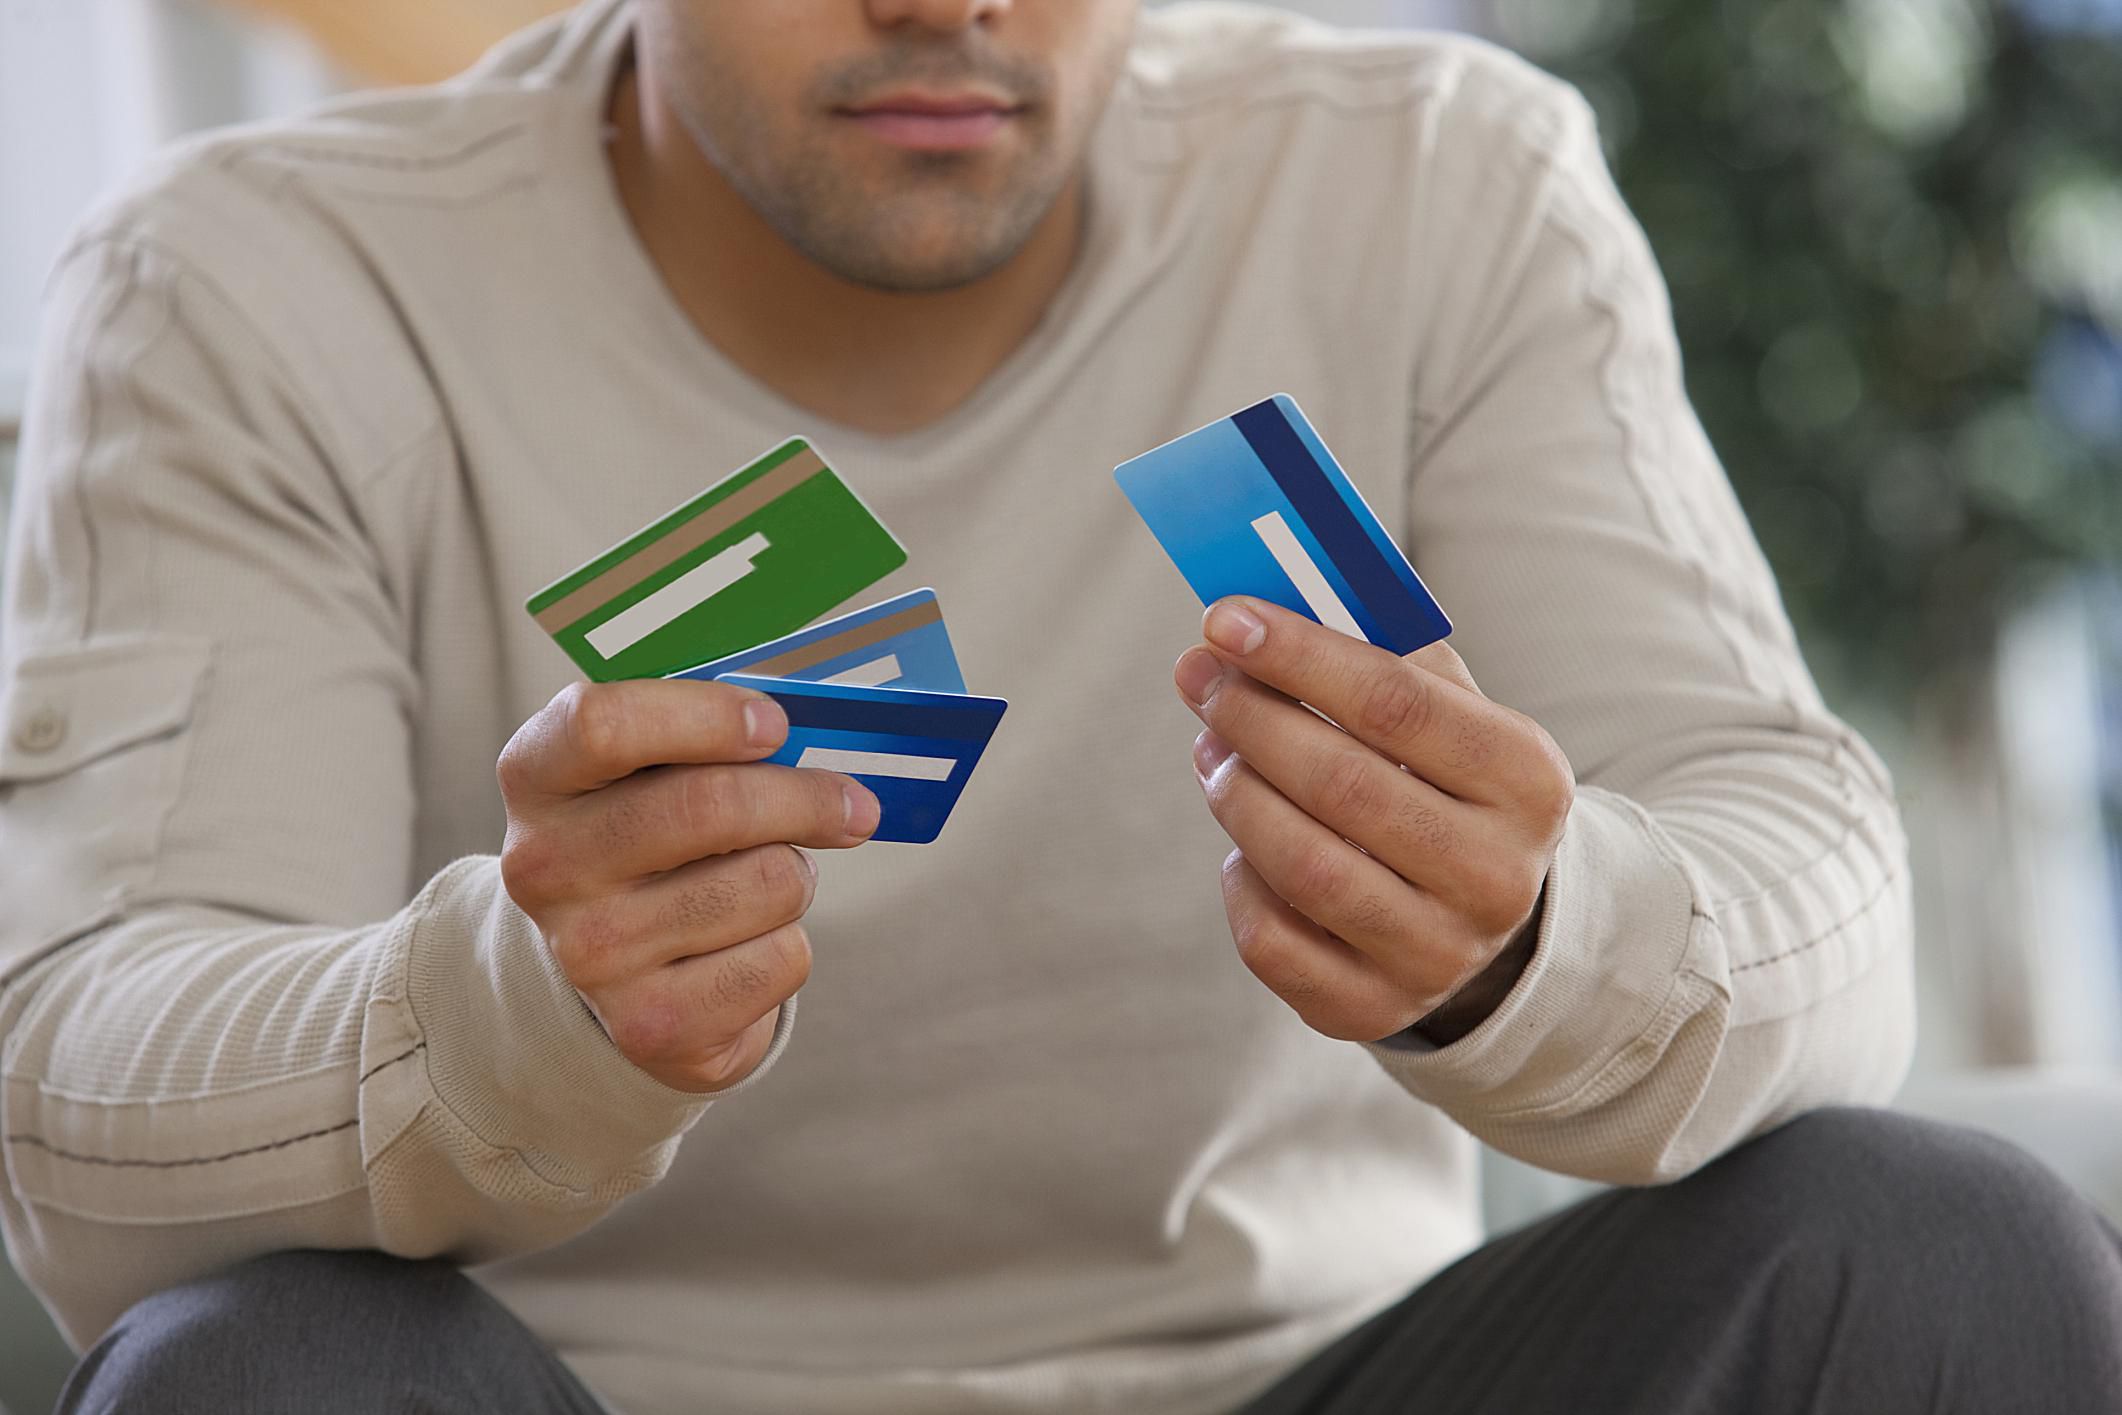 Кредиты в жизни человека. Мужчина с кредиткой. Карточка человека. Мужчина с картой банка. Много банковских карт в руке.